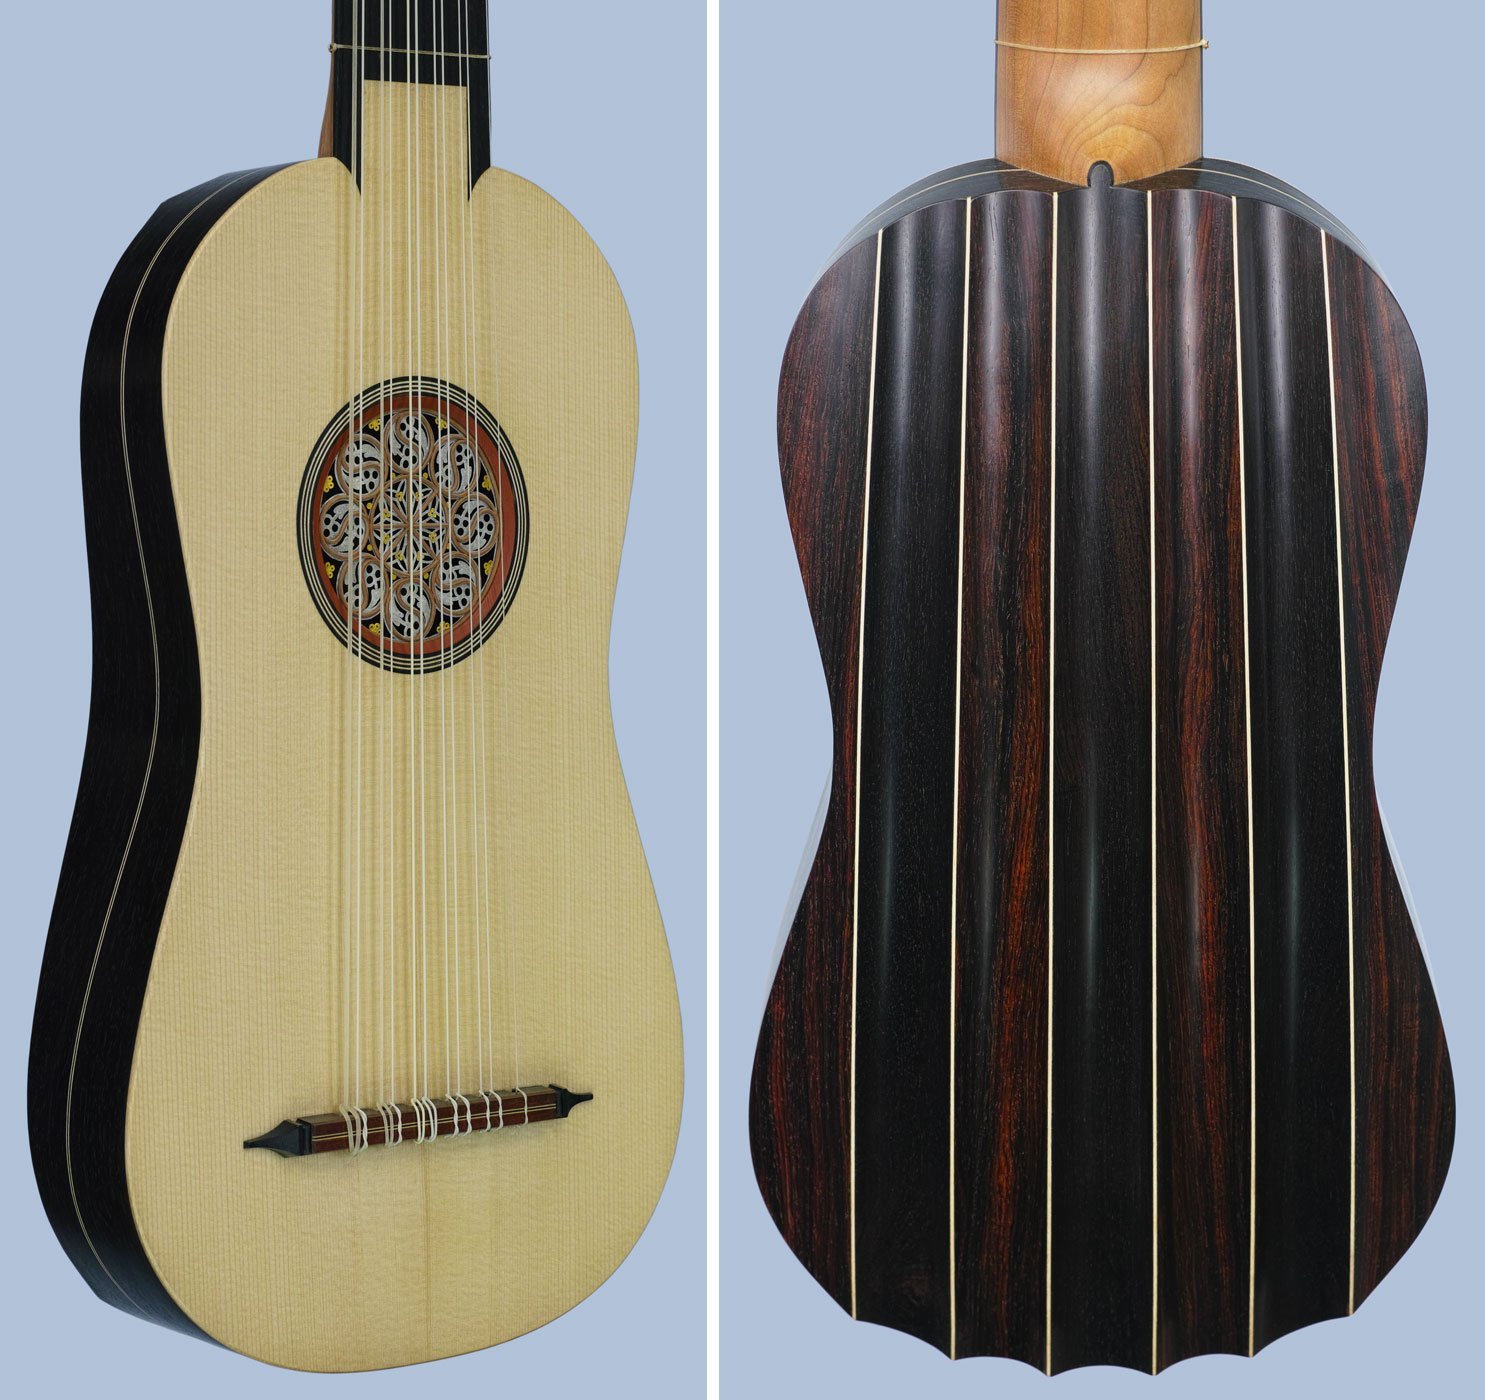 Fluted-back vihuela de mano, soundboard and back ribs